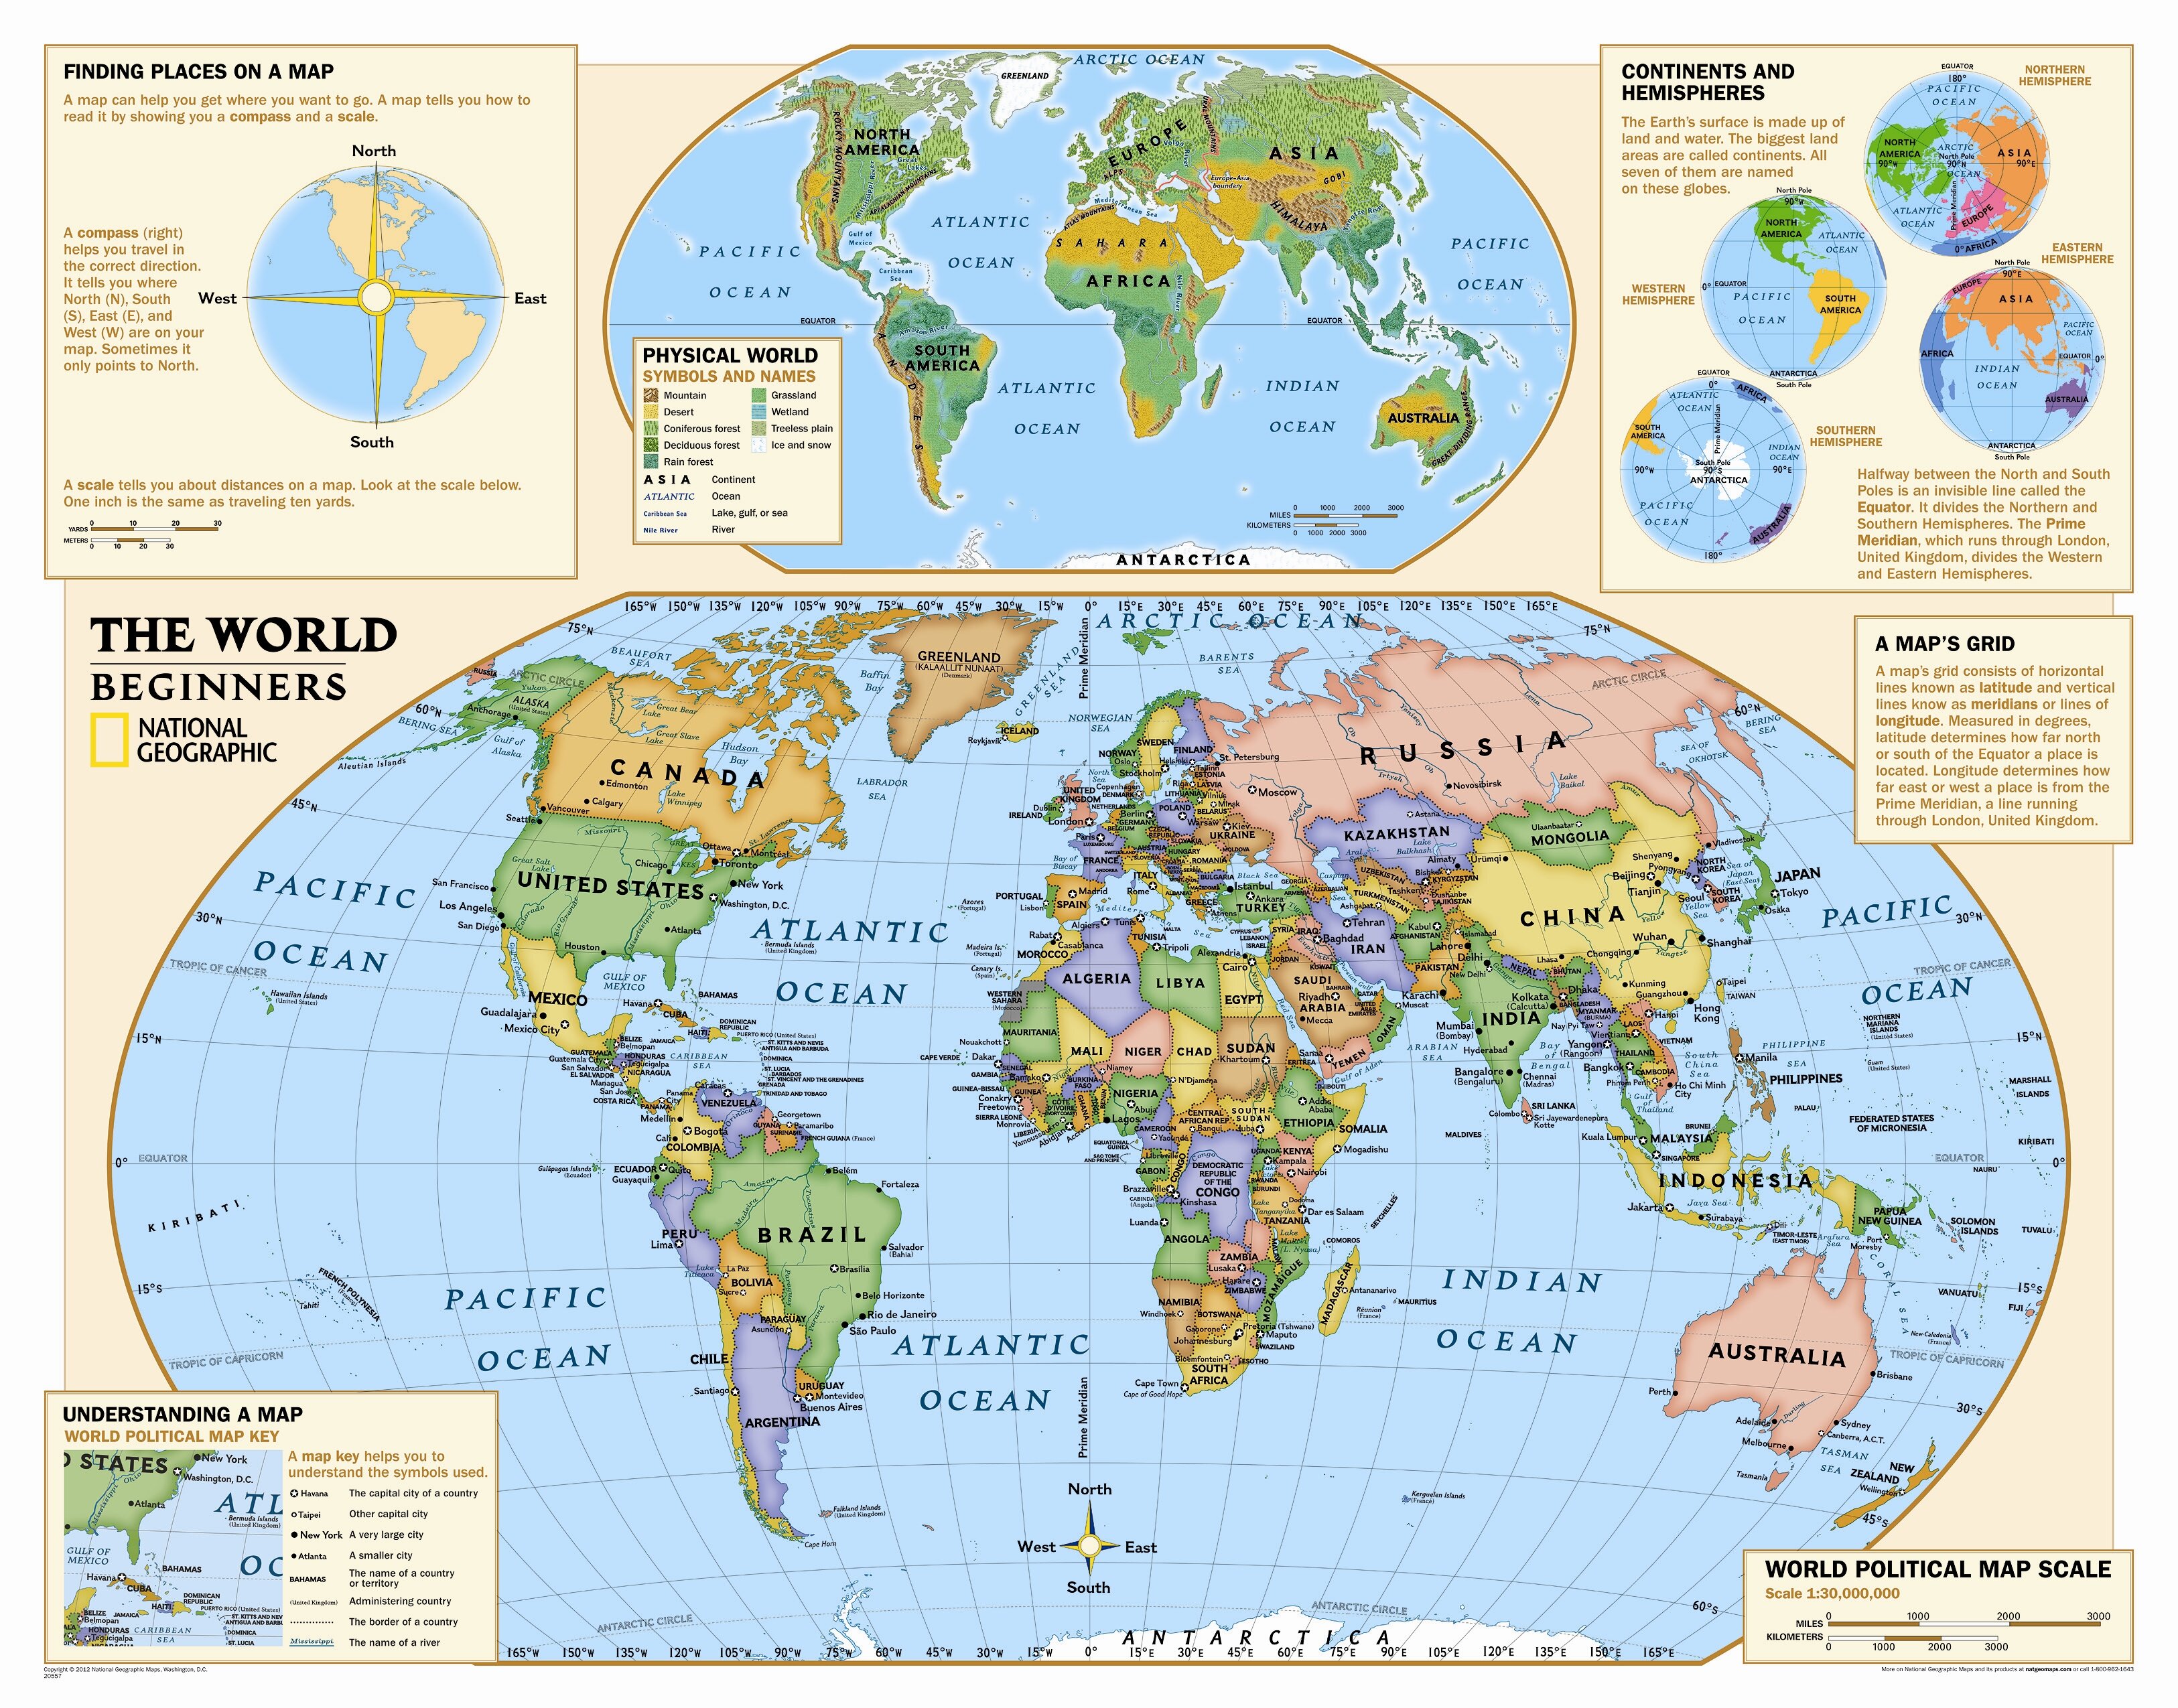 Equator On World Map